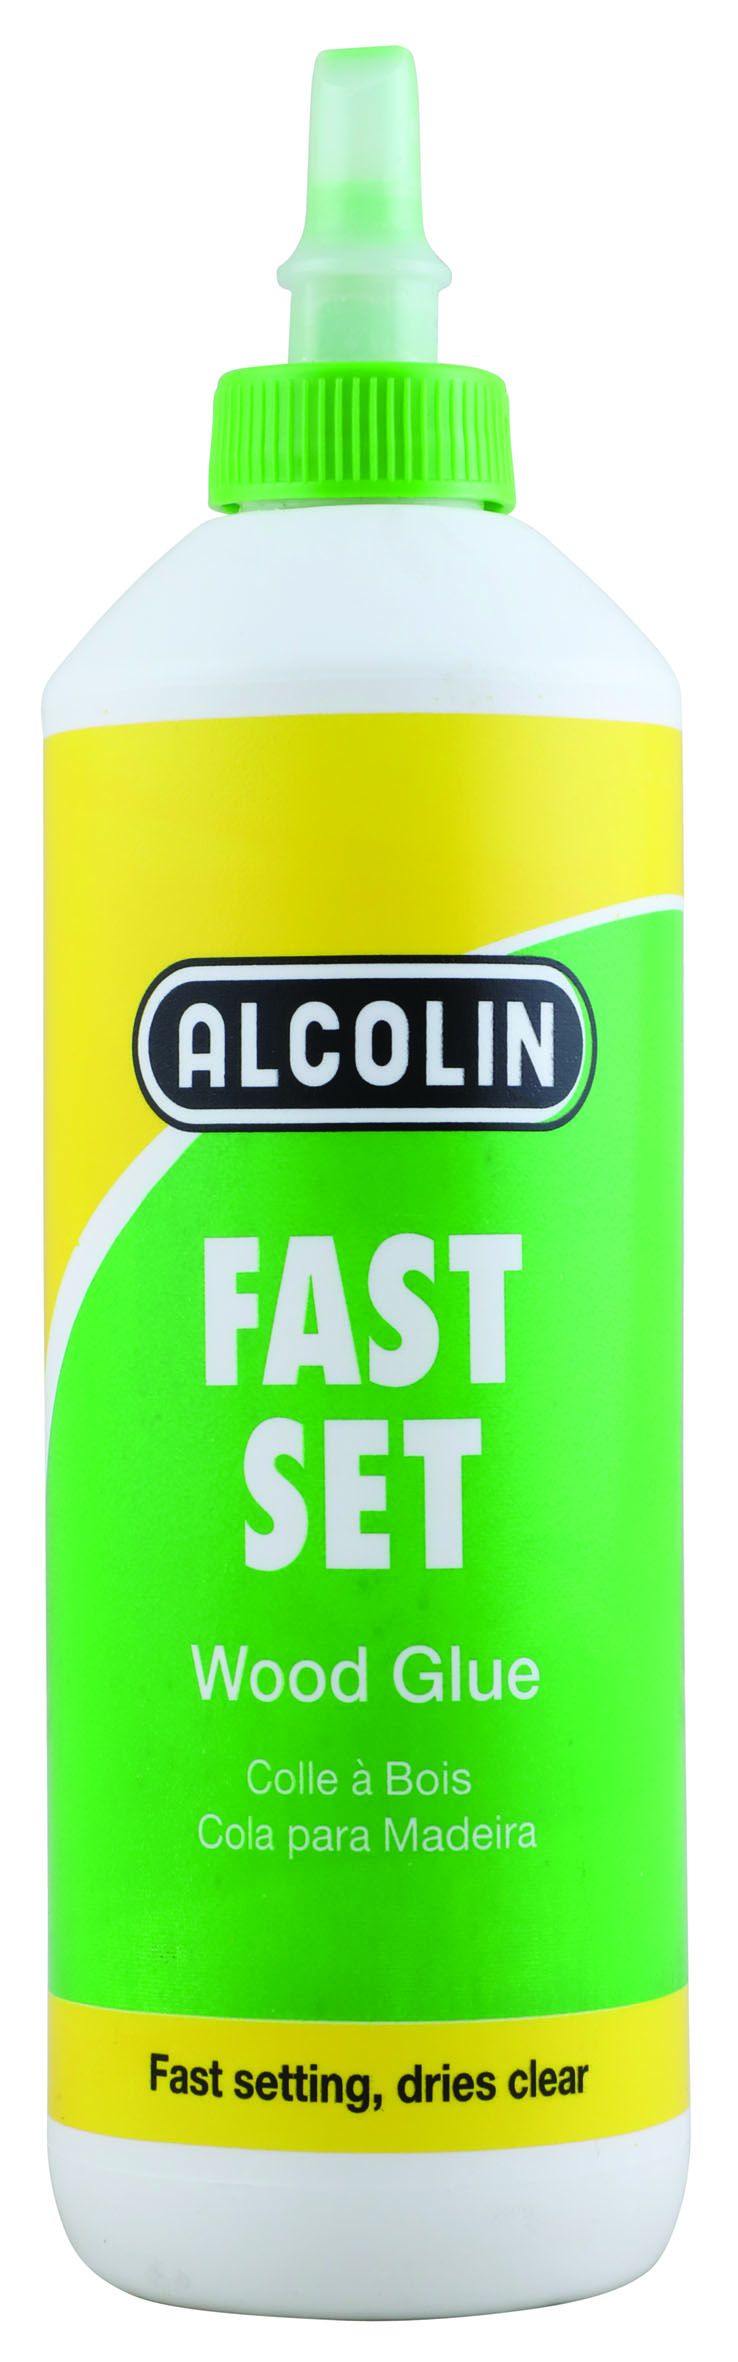 Fast Set Wood Glue - Alcolin